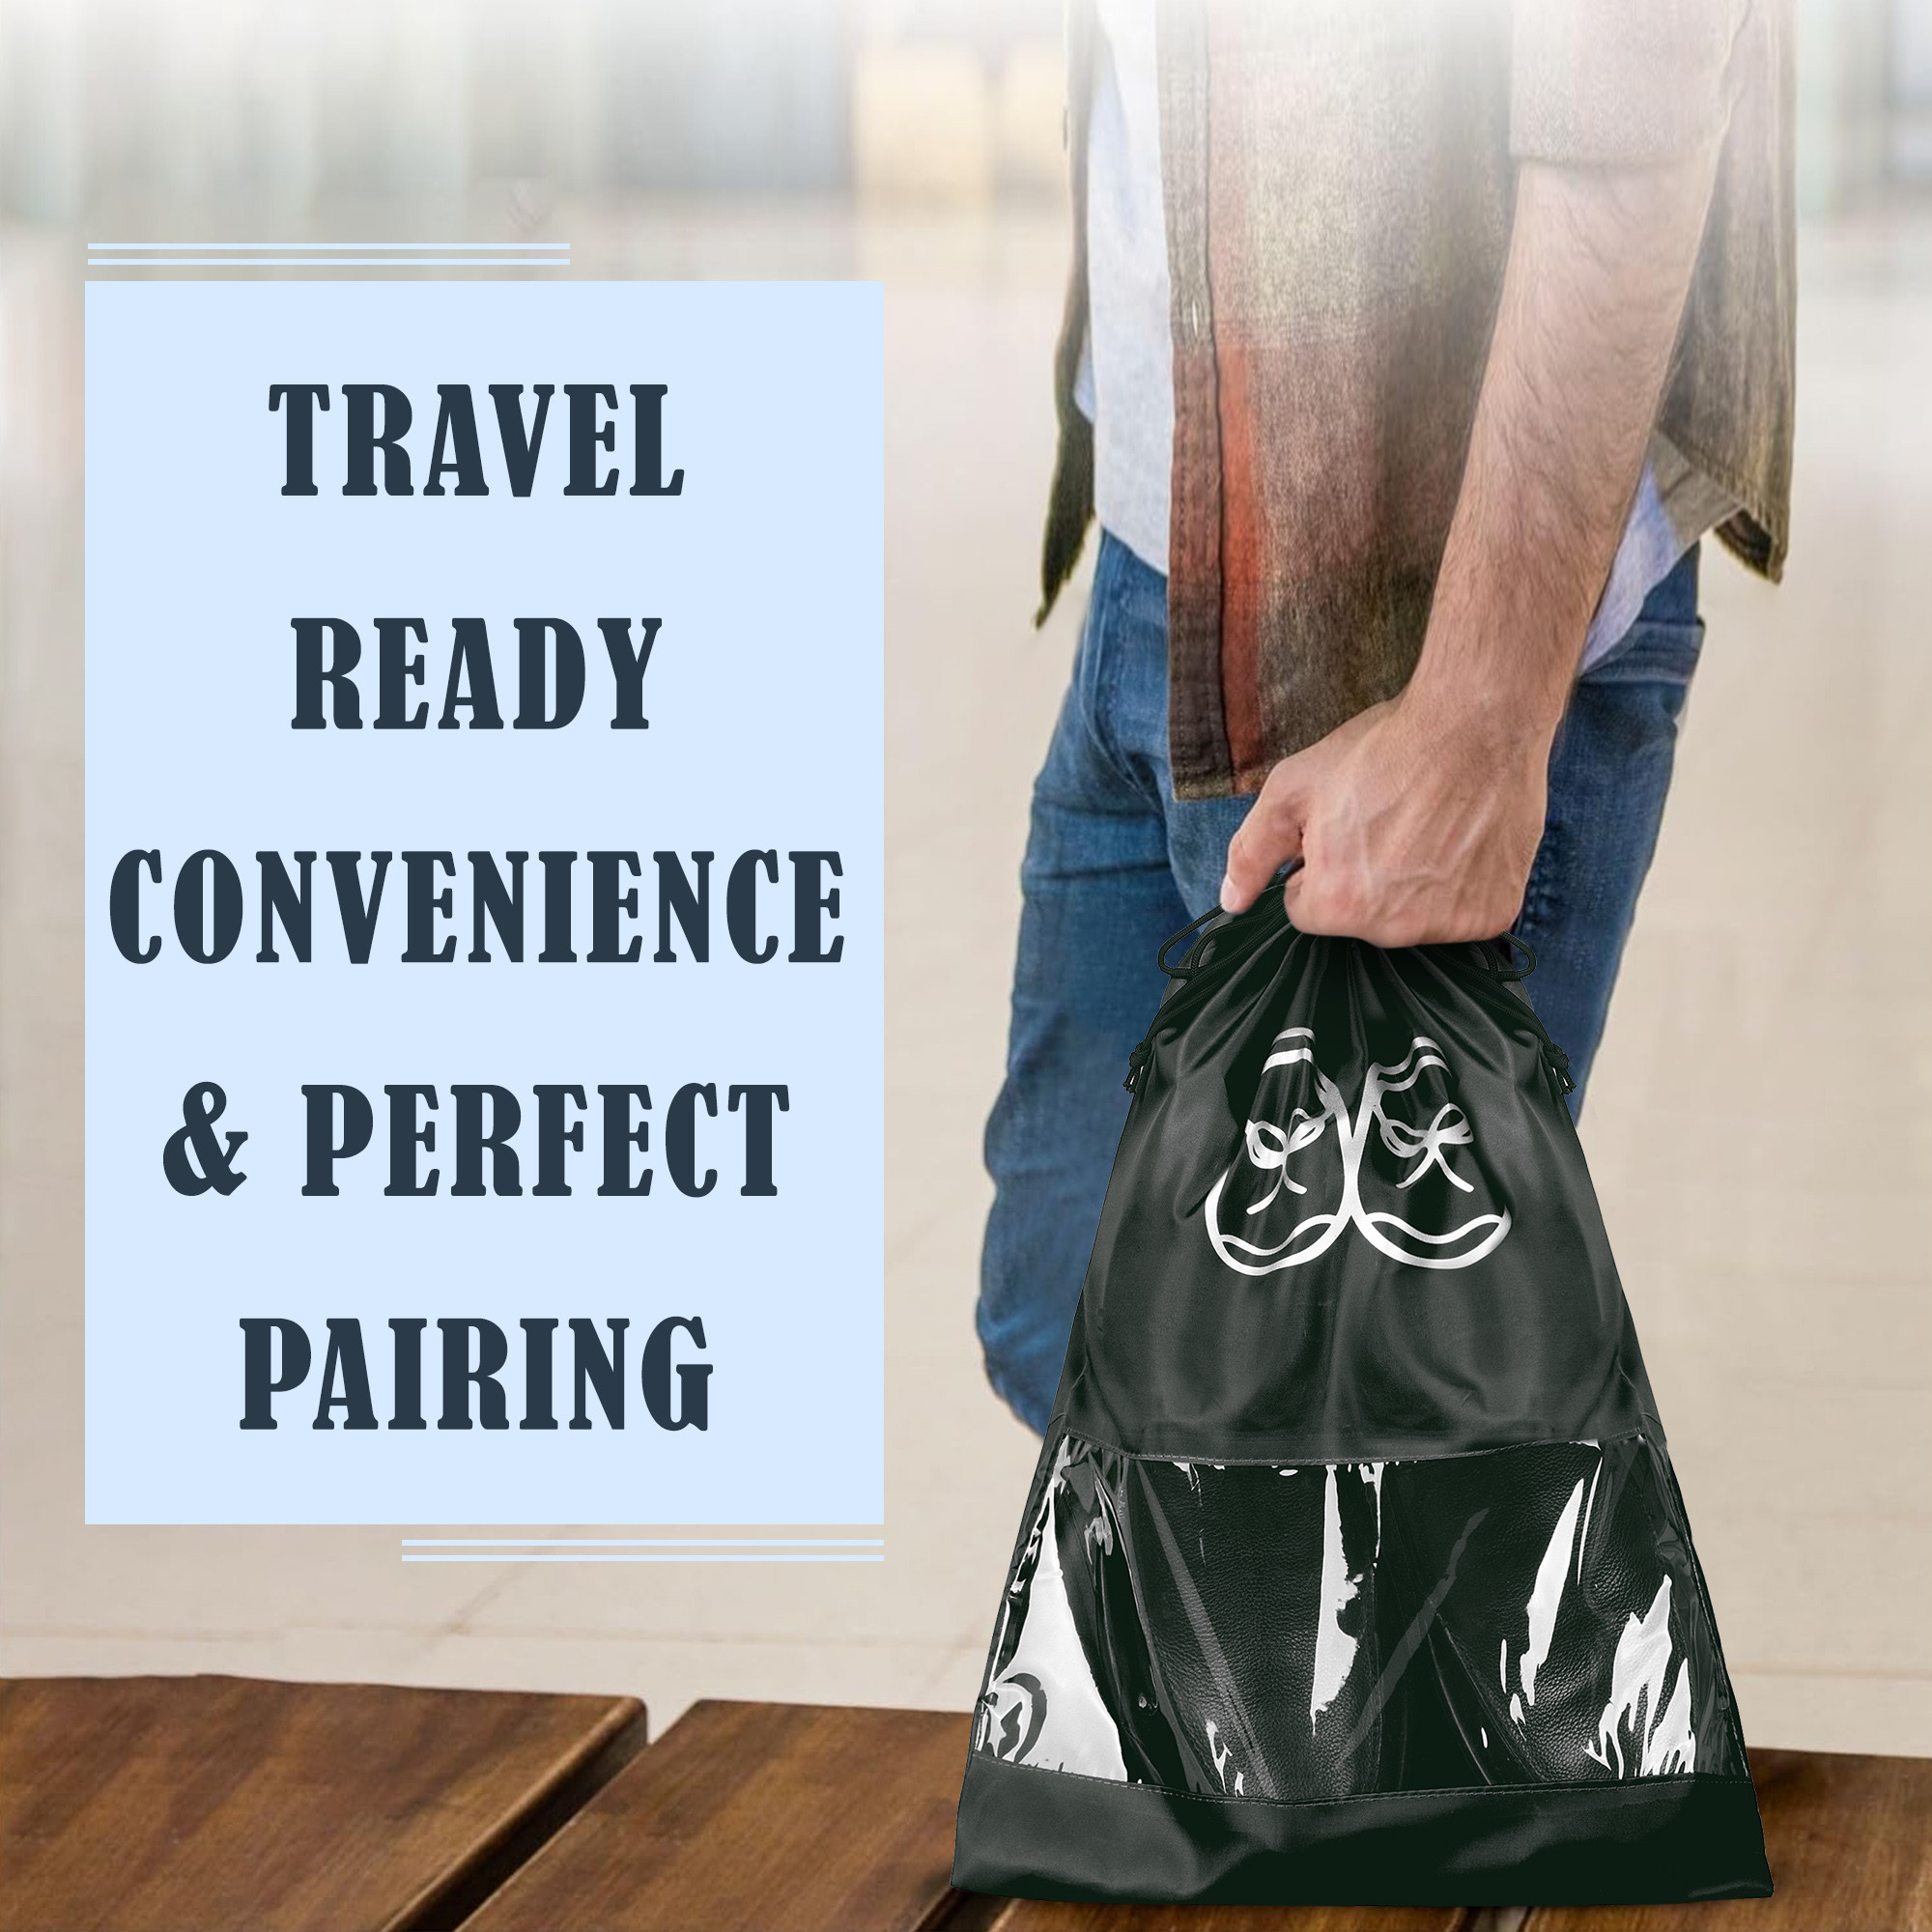 Kuber Industries Travel Shoe Organizer | Storage Bags | Travel Carrying Bag | Storage Organizers Set | Shoe Cover with Transparent Window | Shoe Dori Cover | Royal Blue & Black